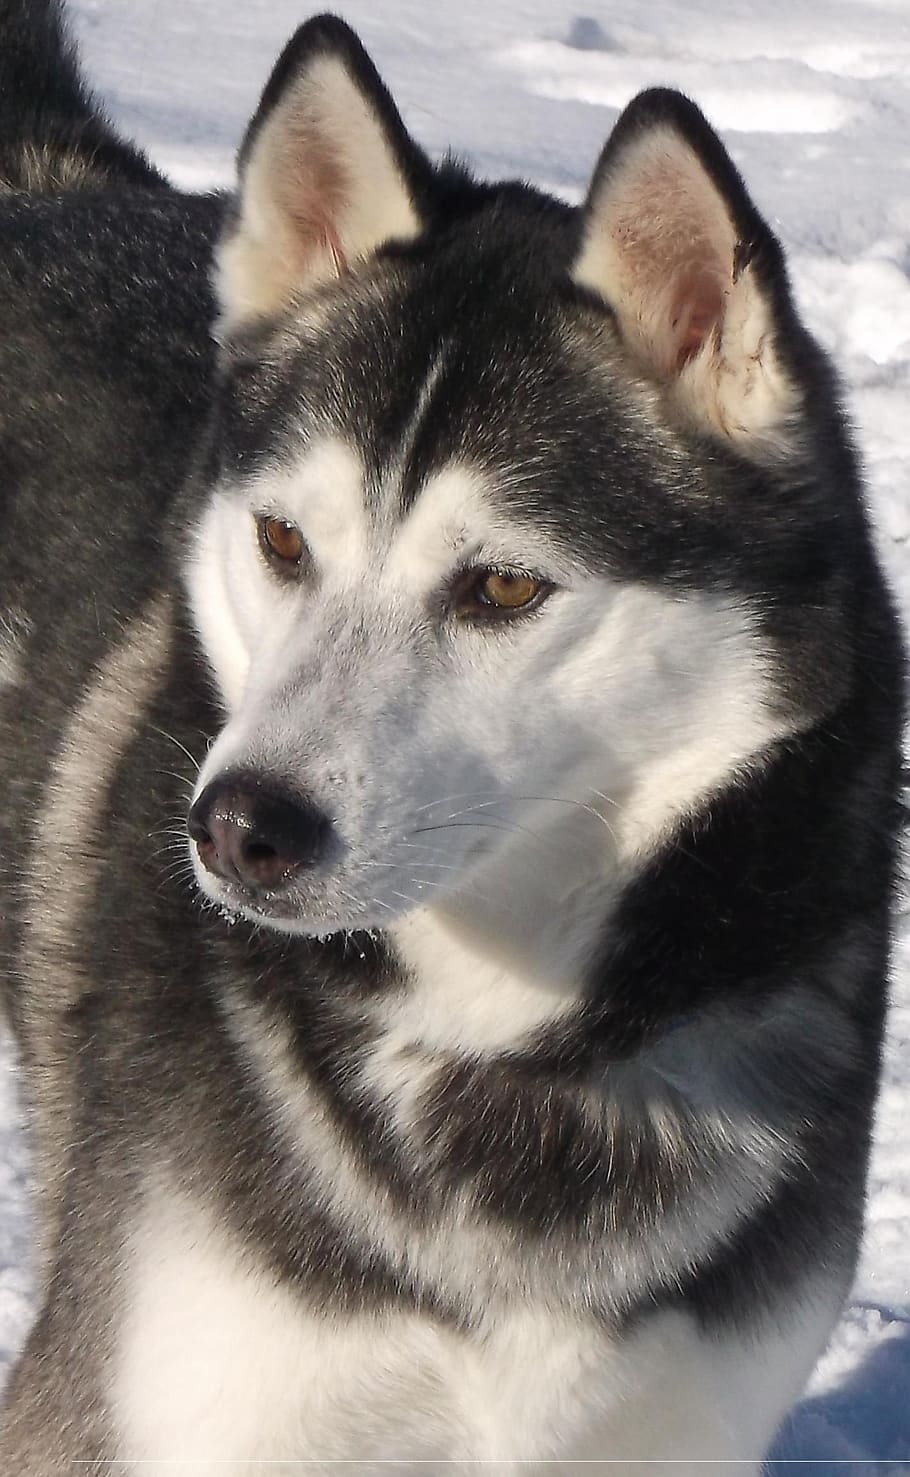 husky, dog, outdoors, winter, pets, snow, canine, siberian, looking, animal